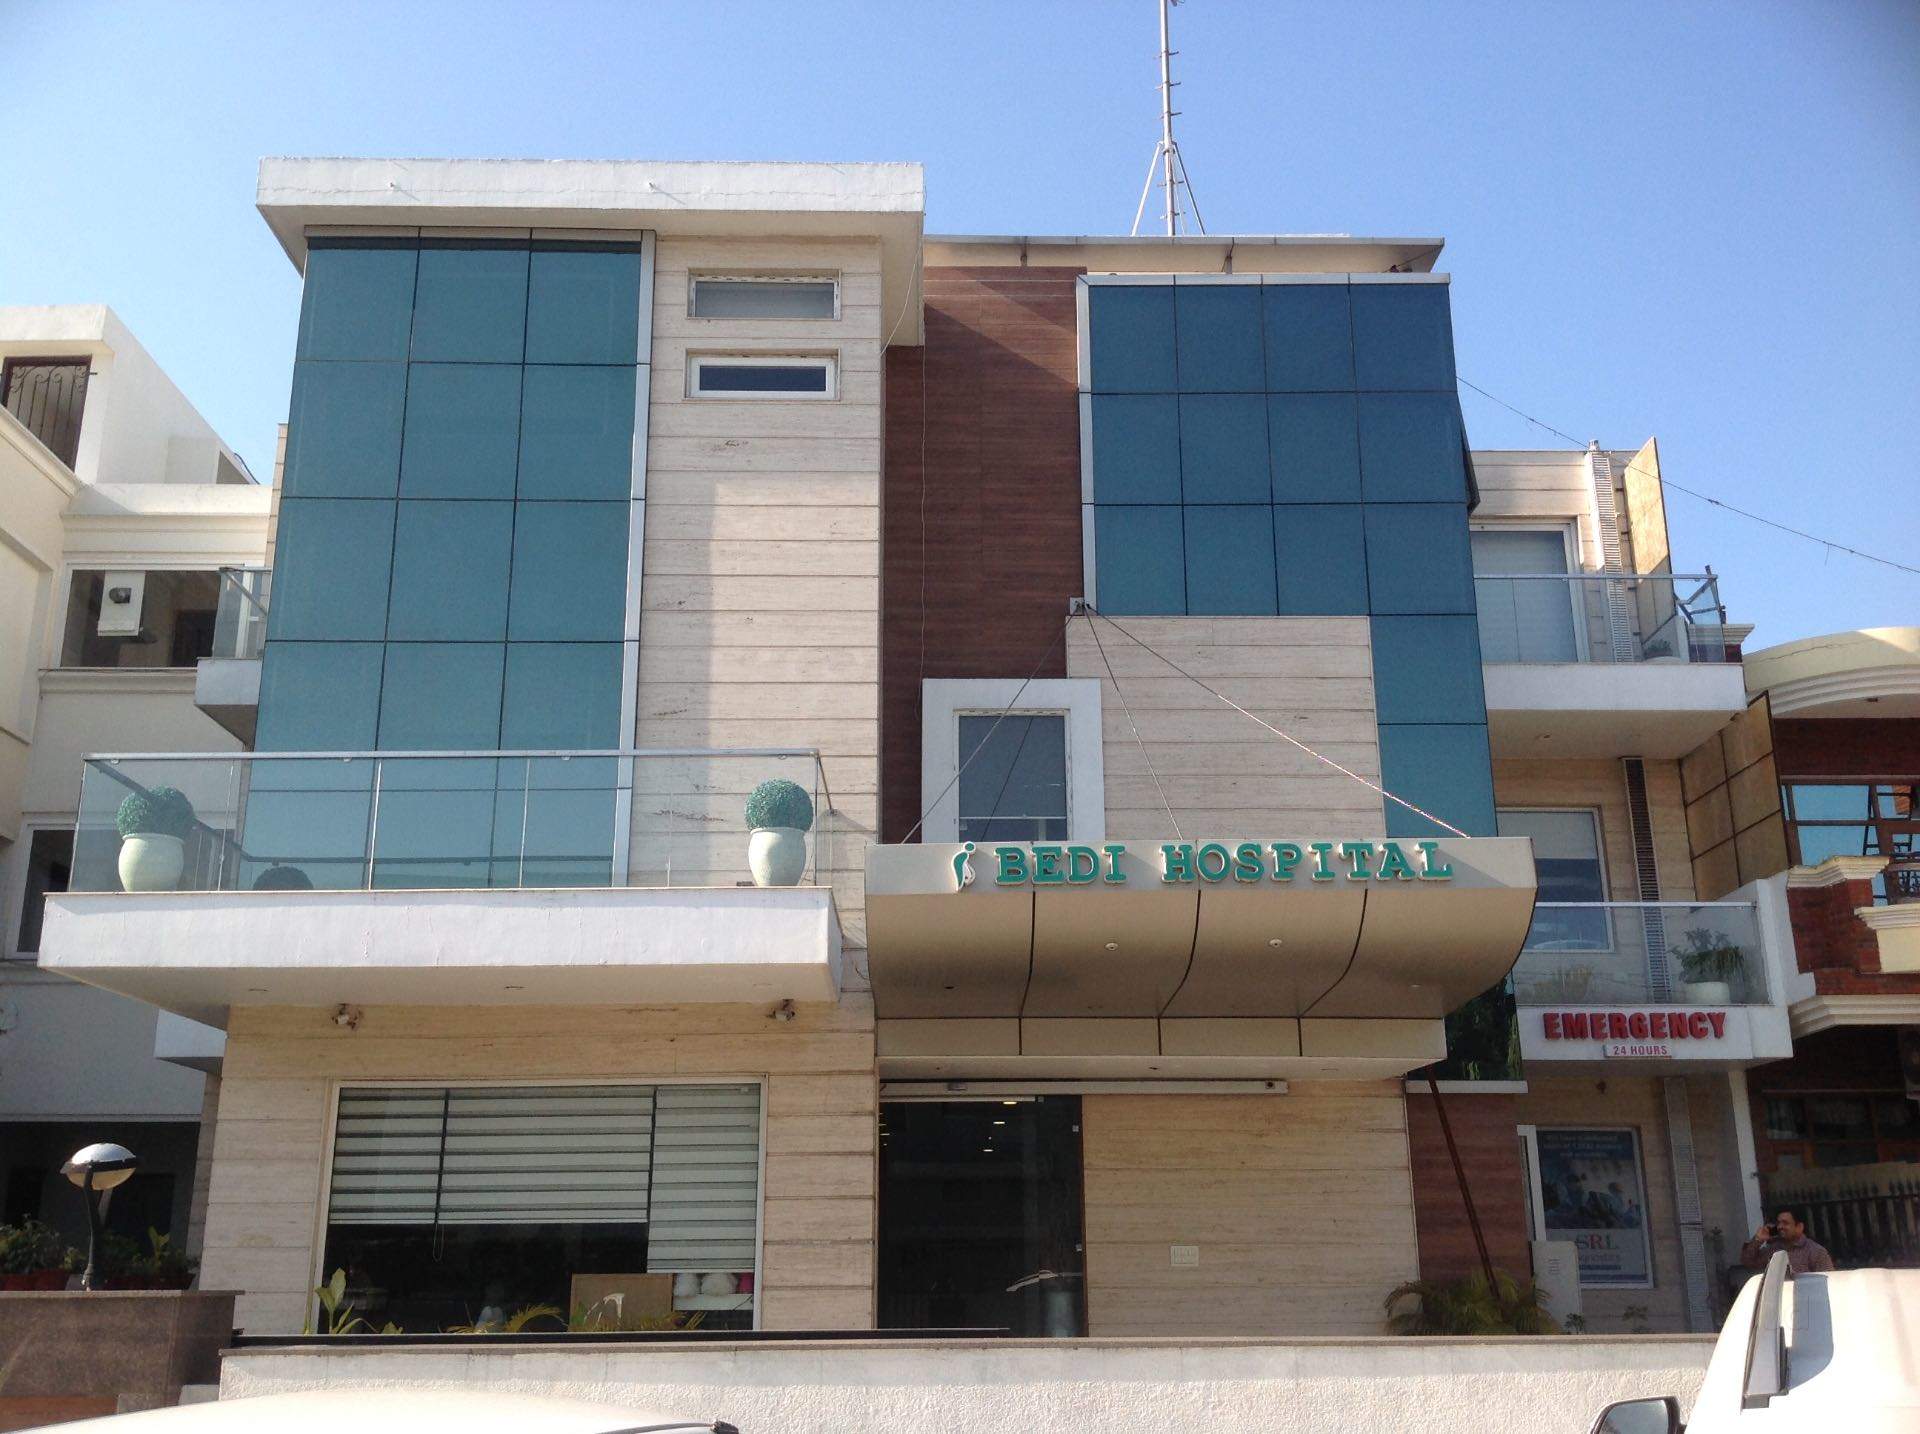 Bedi Hospital Chandigarh Hospitals 01